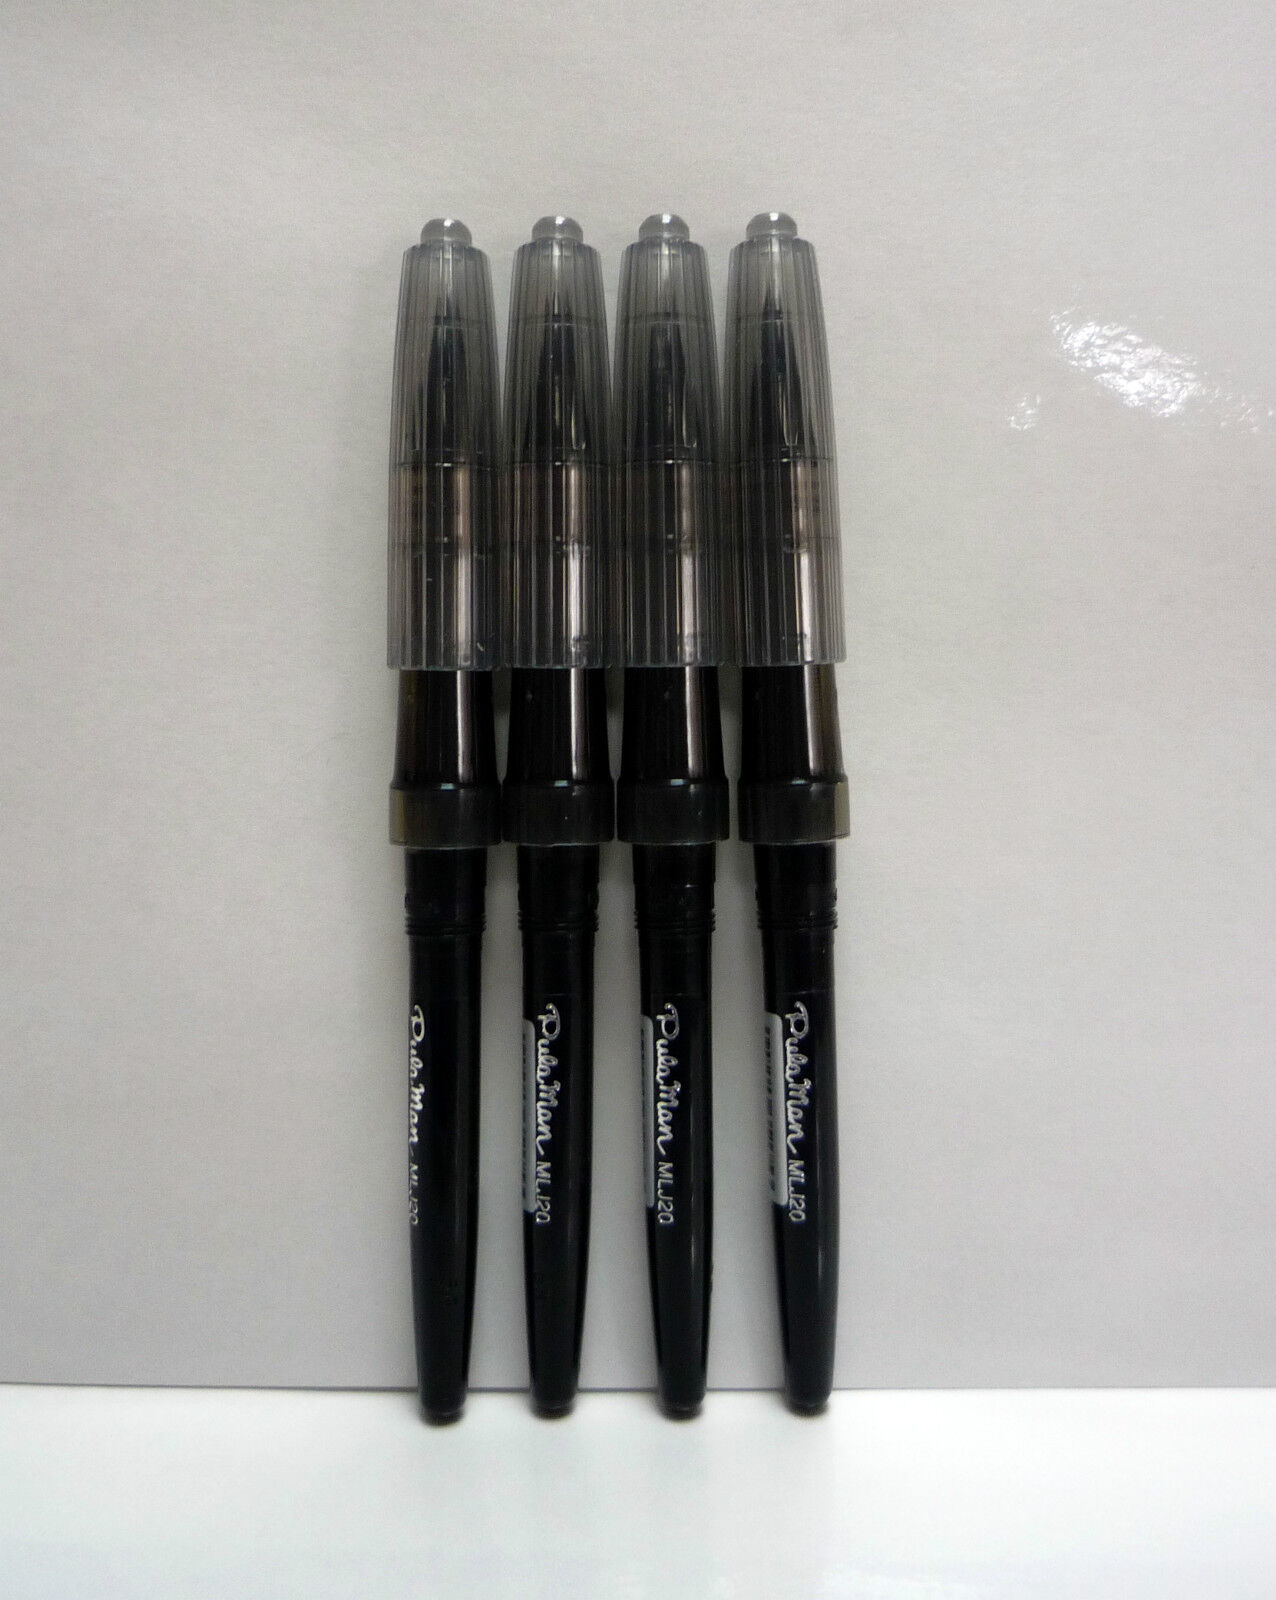 Pentel Tradio Stylo Fountain Pen Black Refill 4 pieces / MLJ20-A / for TRJ50-A 